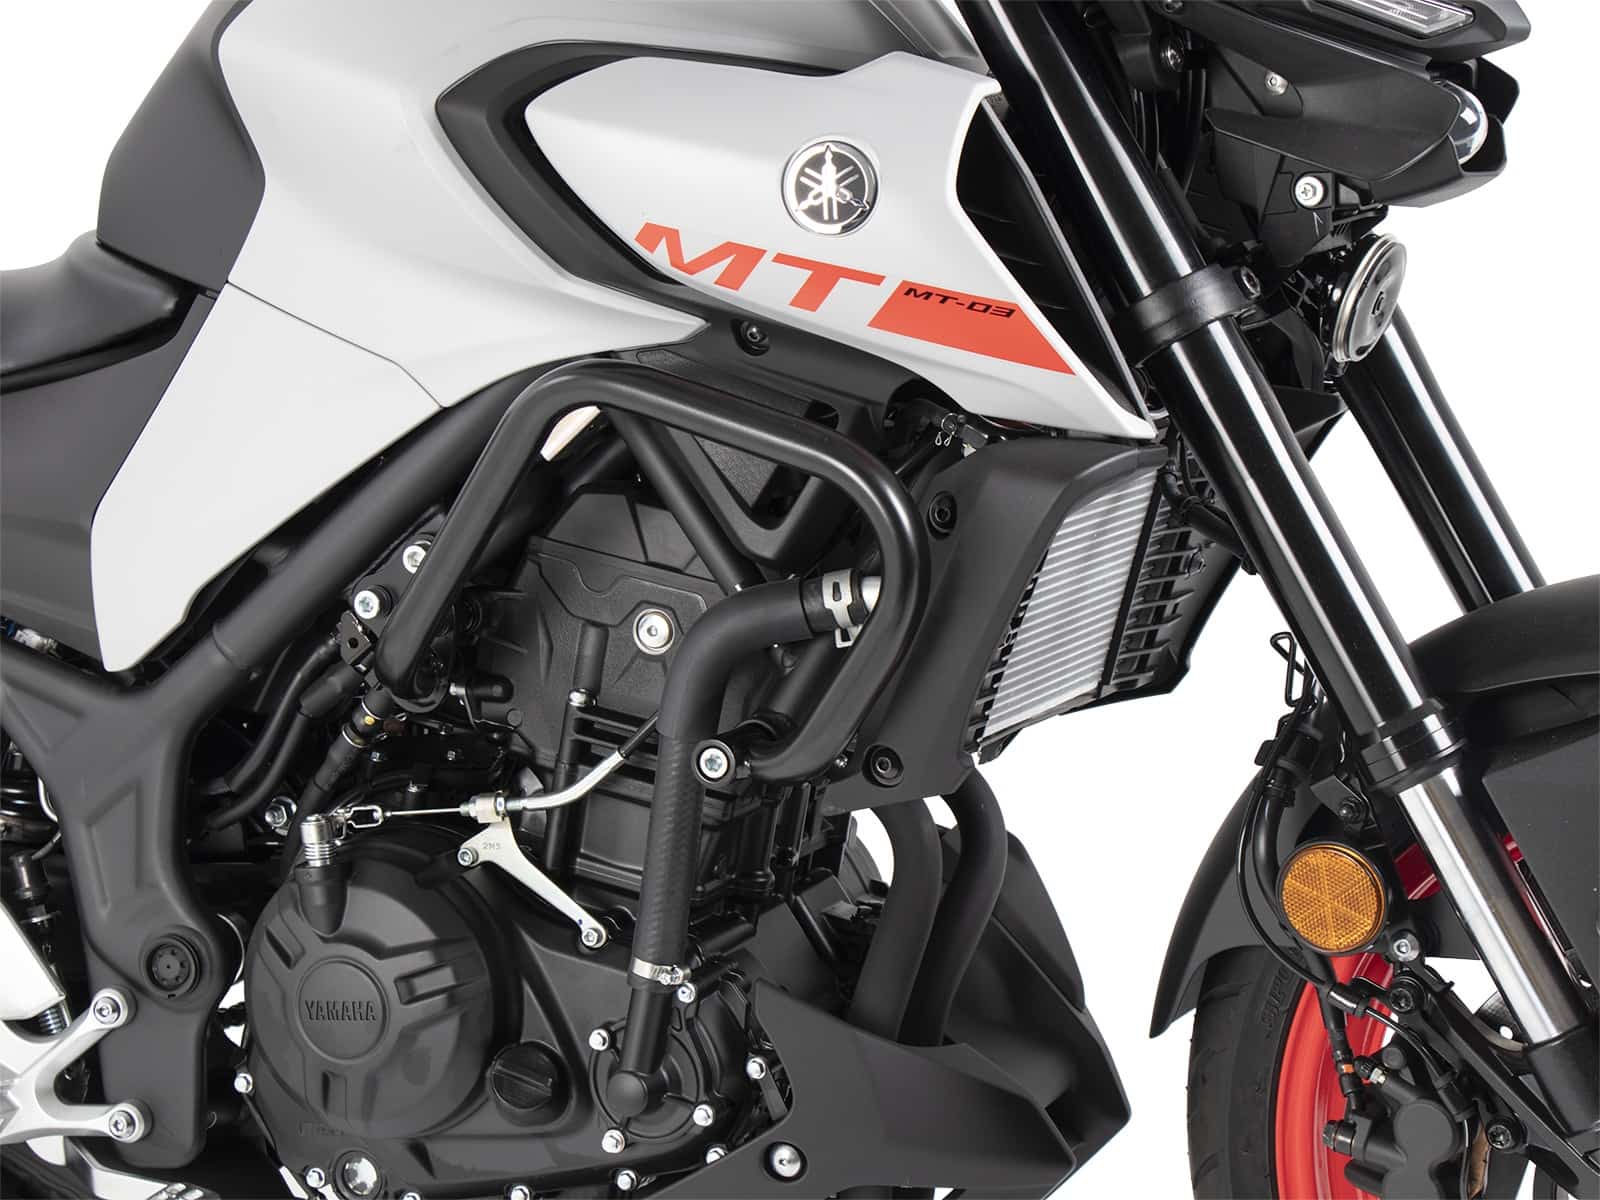 Motorschutzbügel schwarz für Yamaha MT-03 (2020-)